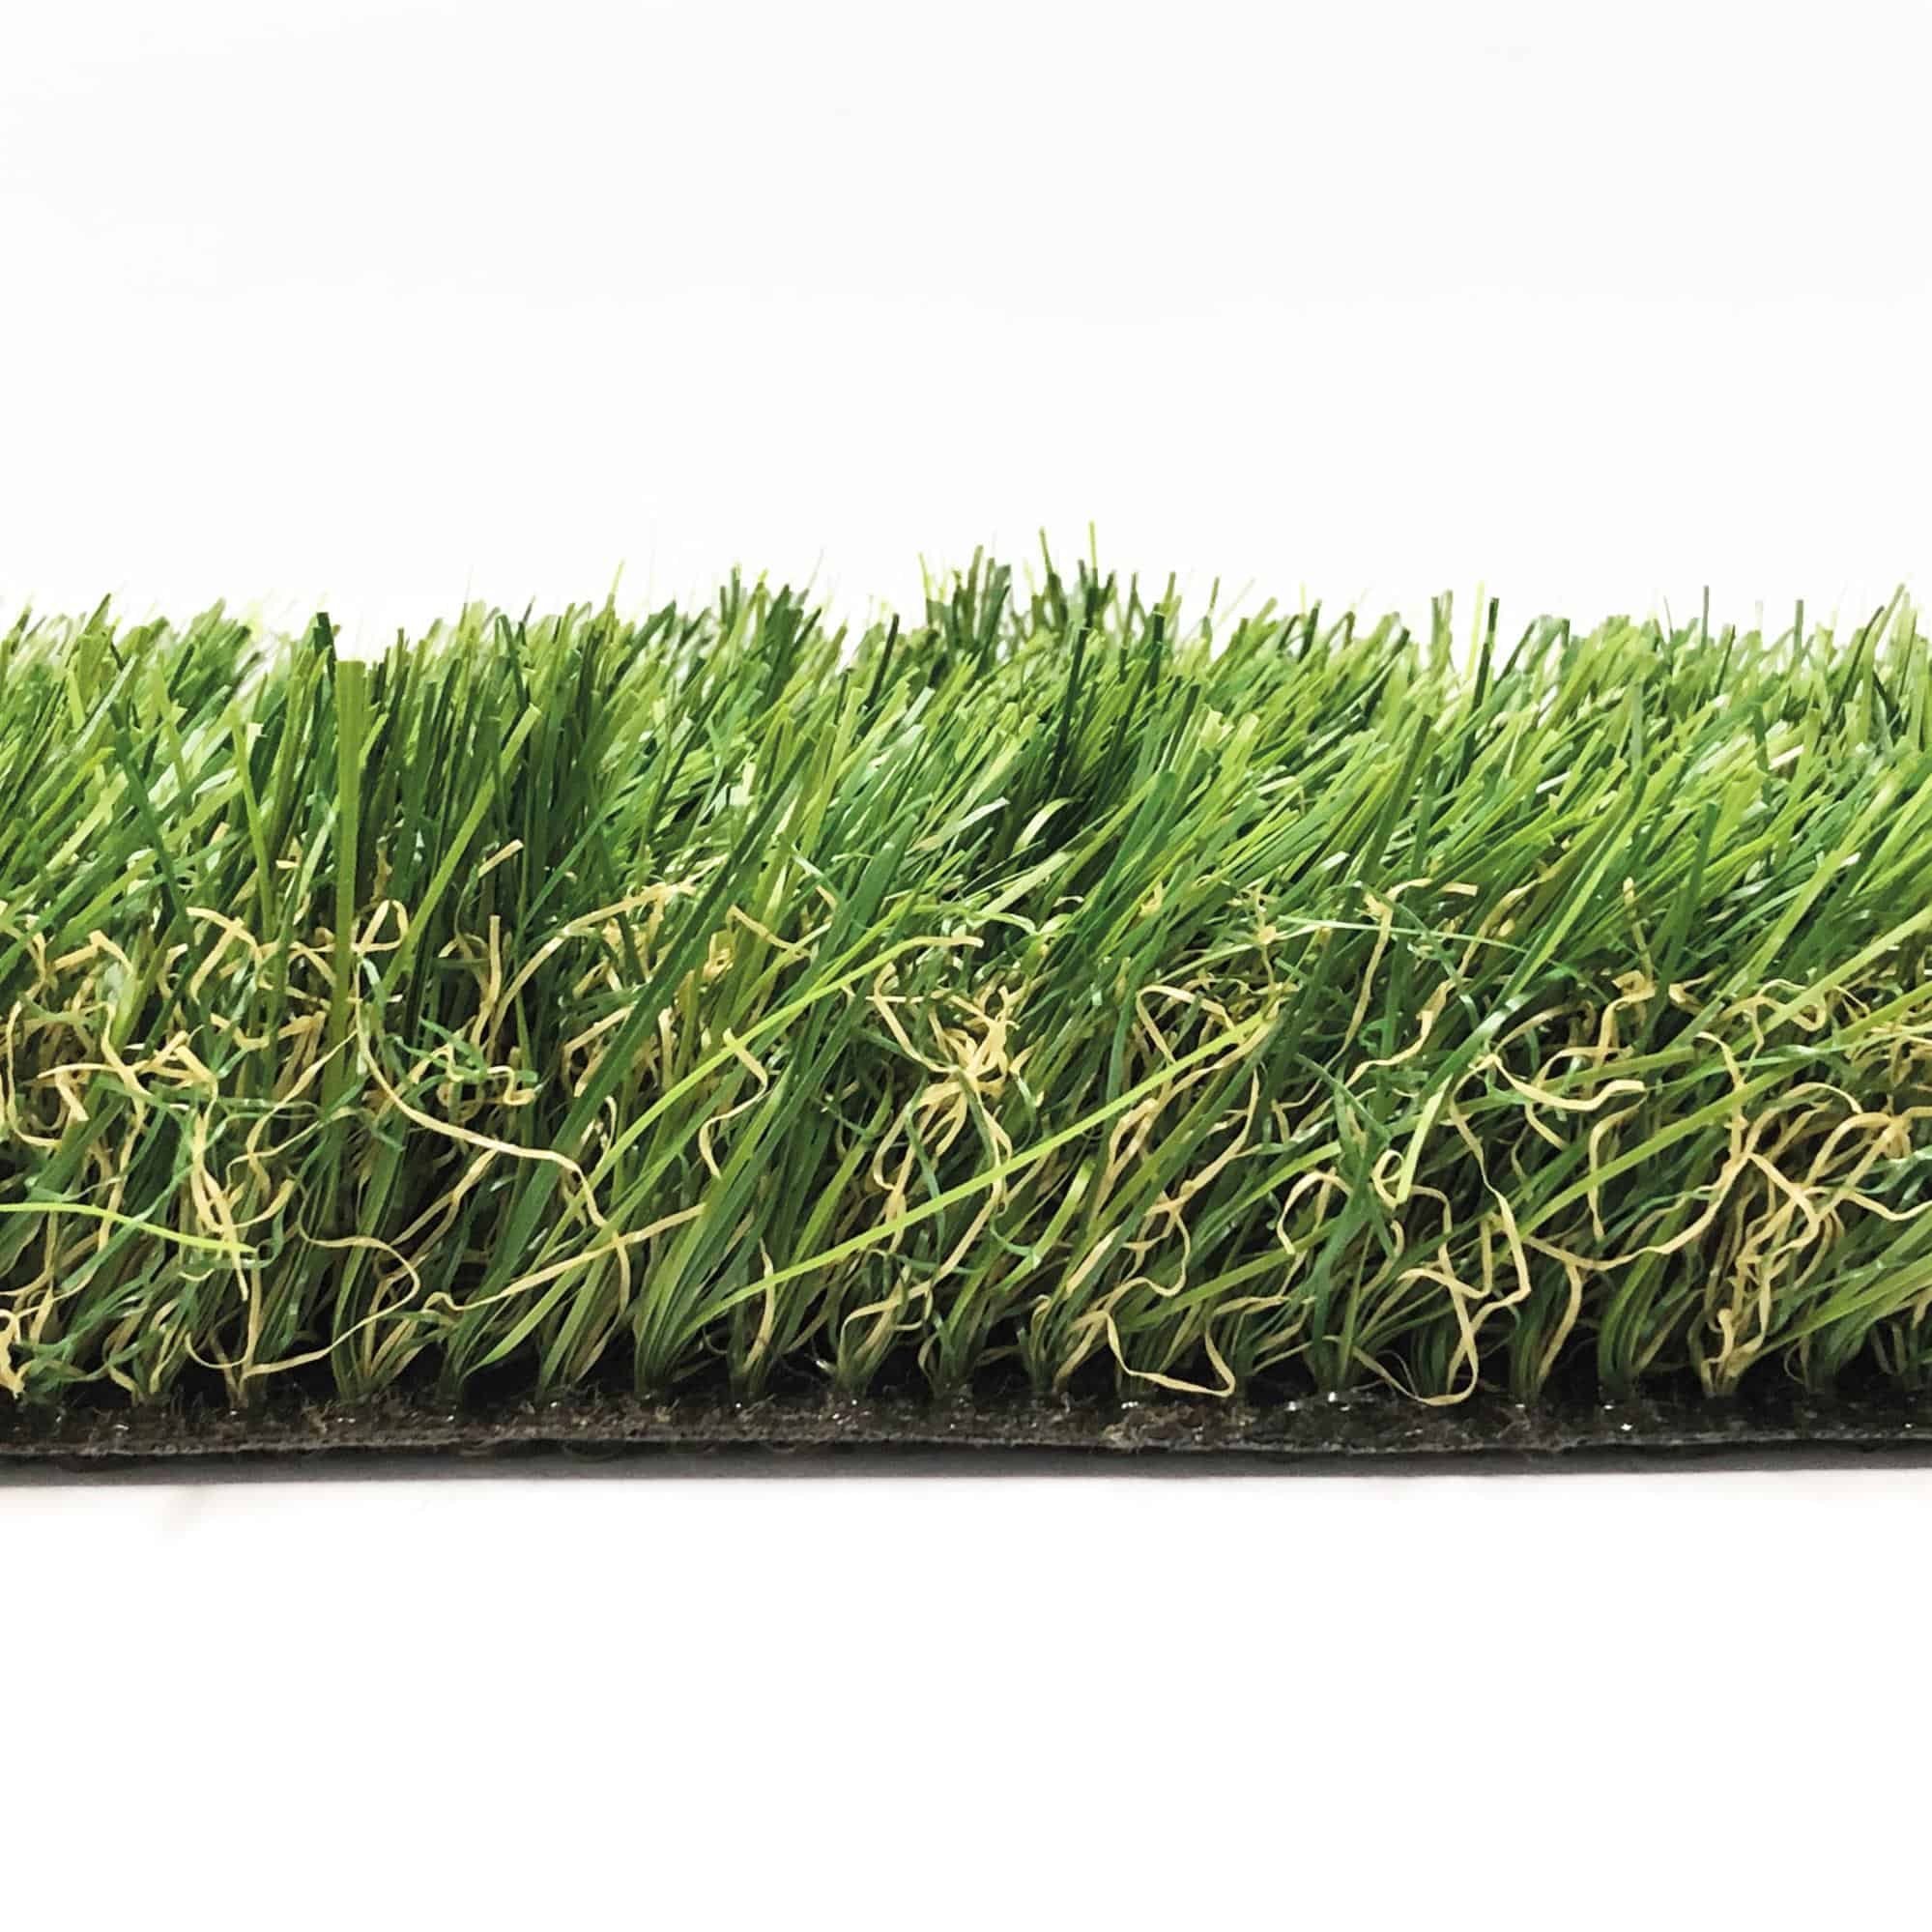 CORE Lawn Natural Artificial Grass 4m Wide Roll 11 m